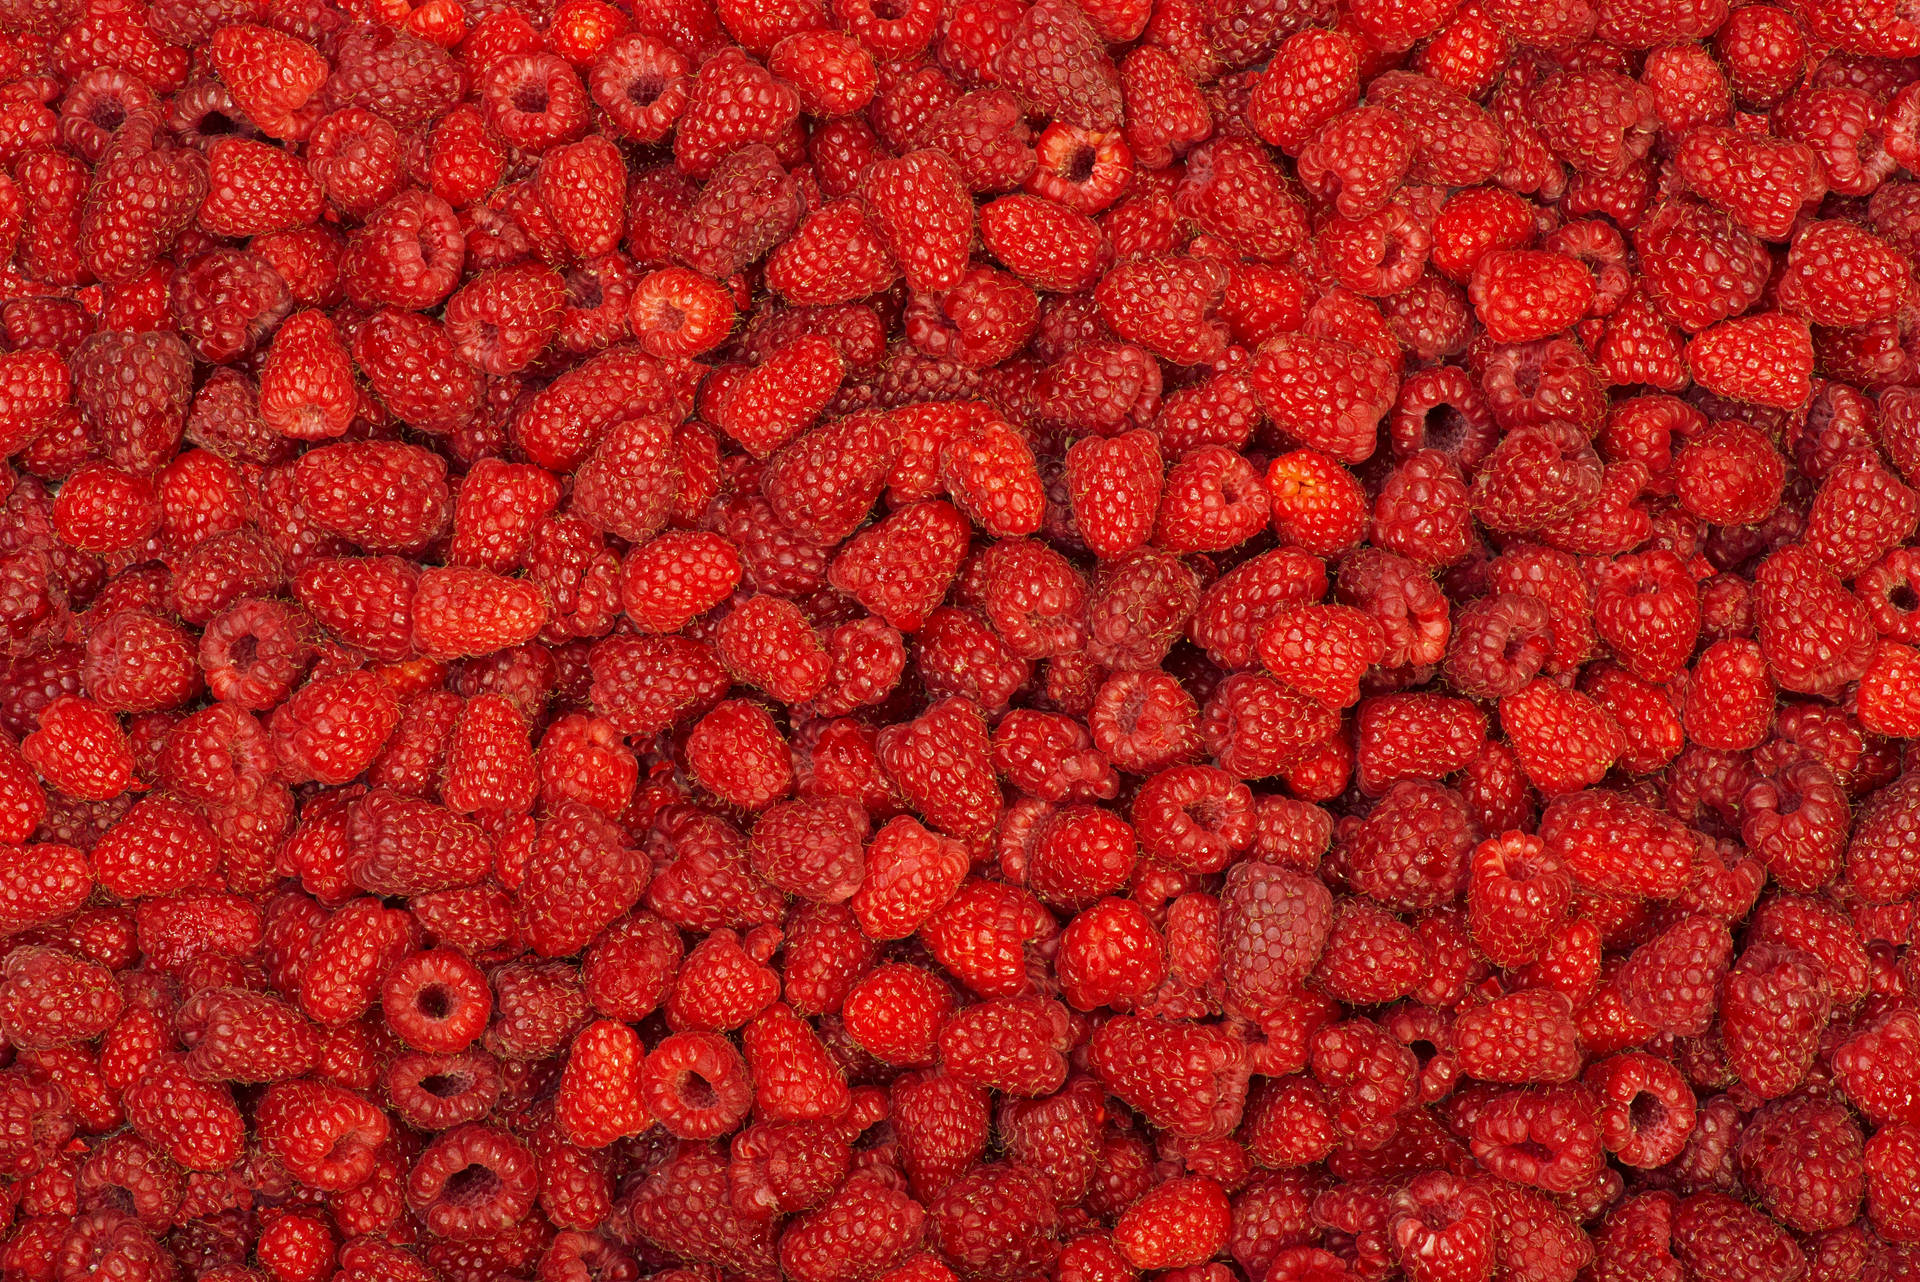 Red 4k Uhd Raspberries Fruit